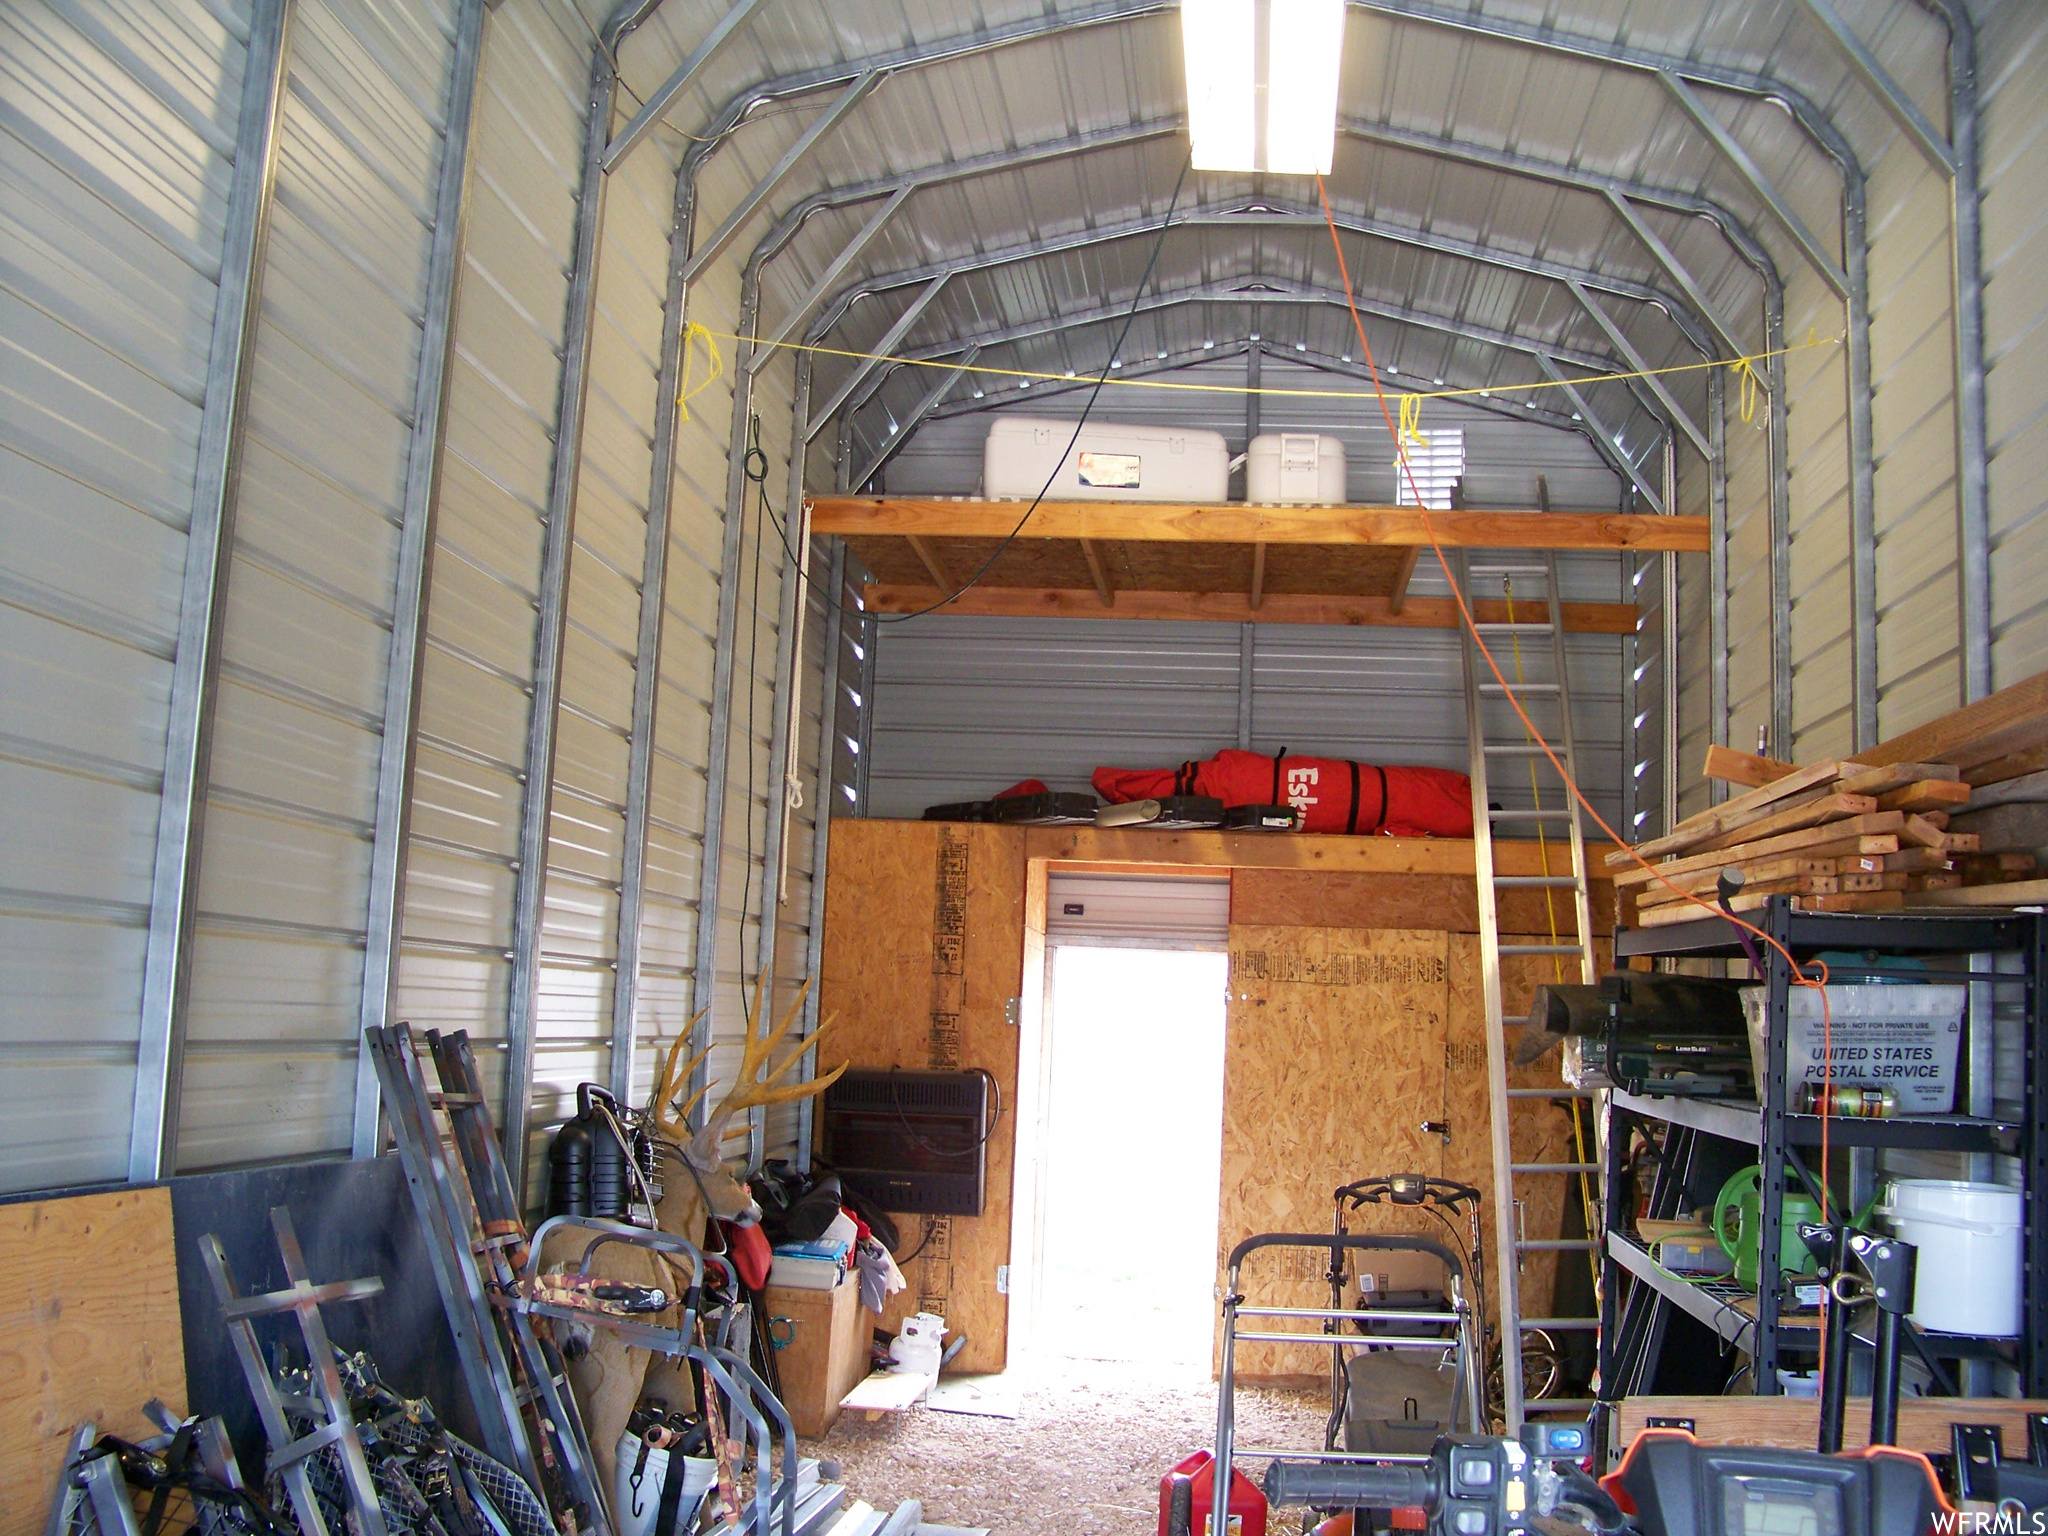 Inside RV or Boat barn